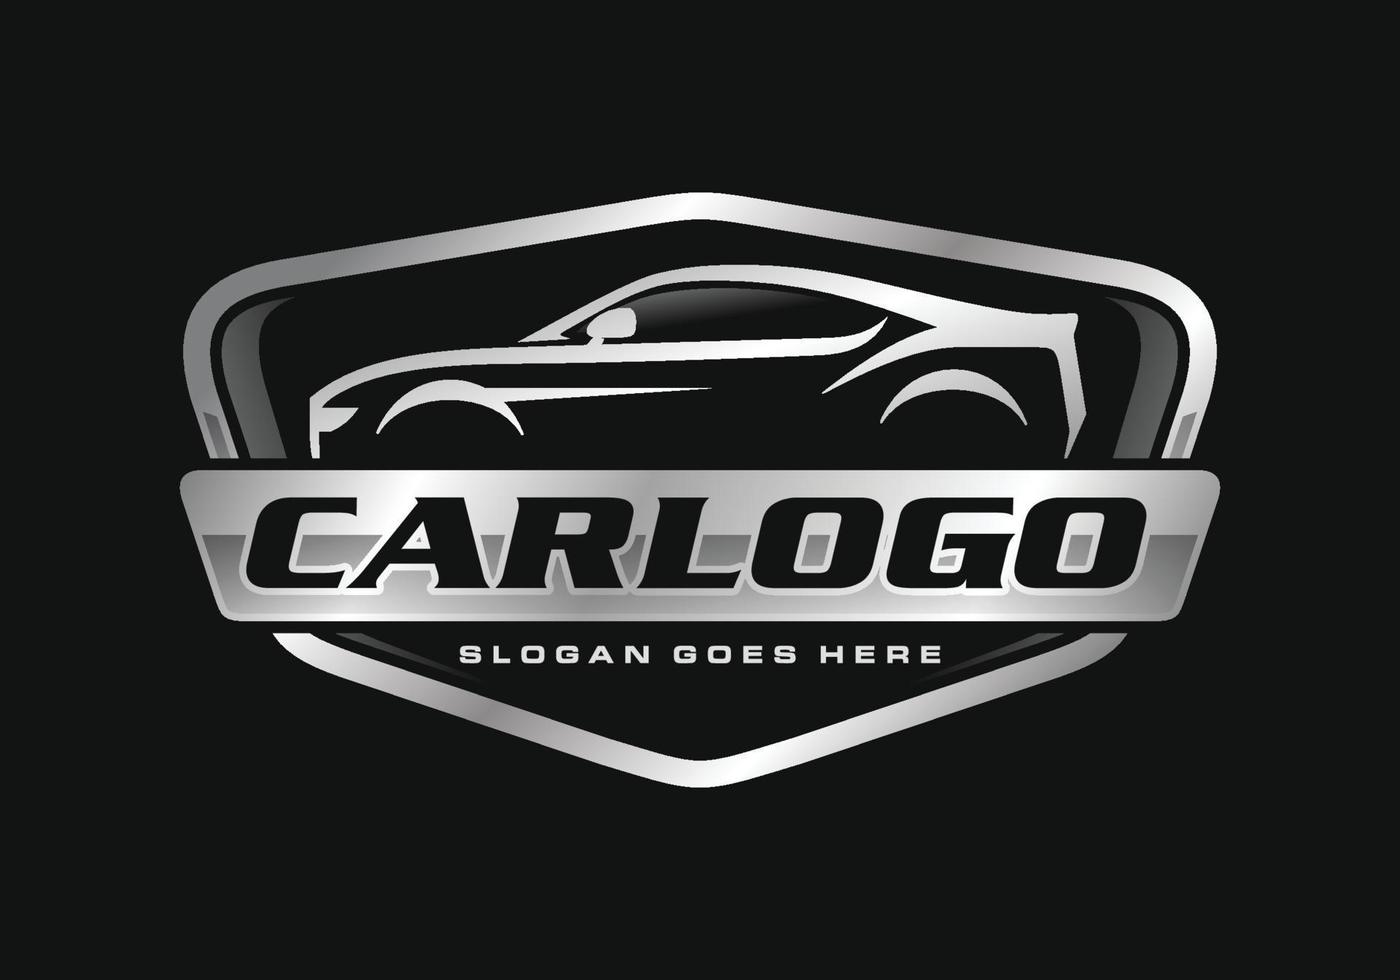 auto automotive logo ontwerp vector